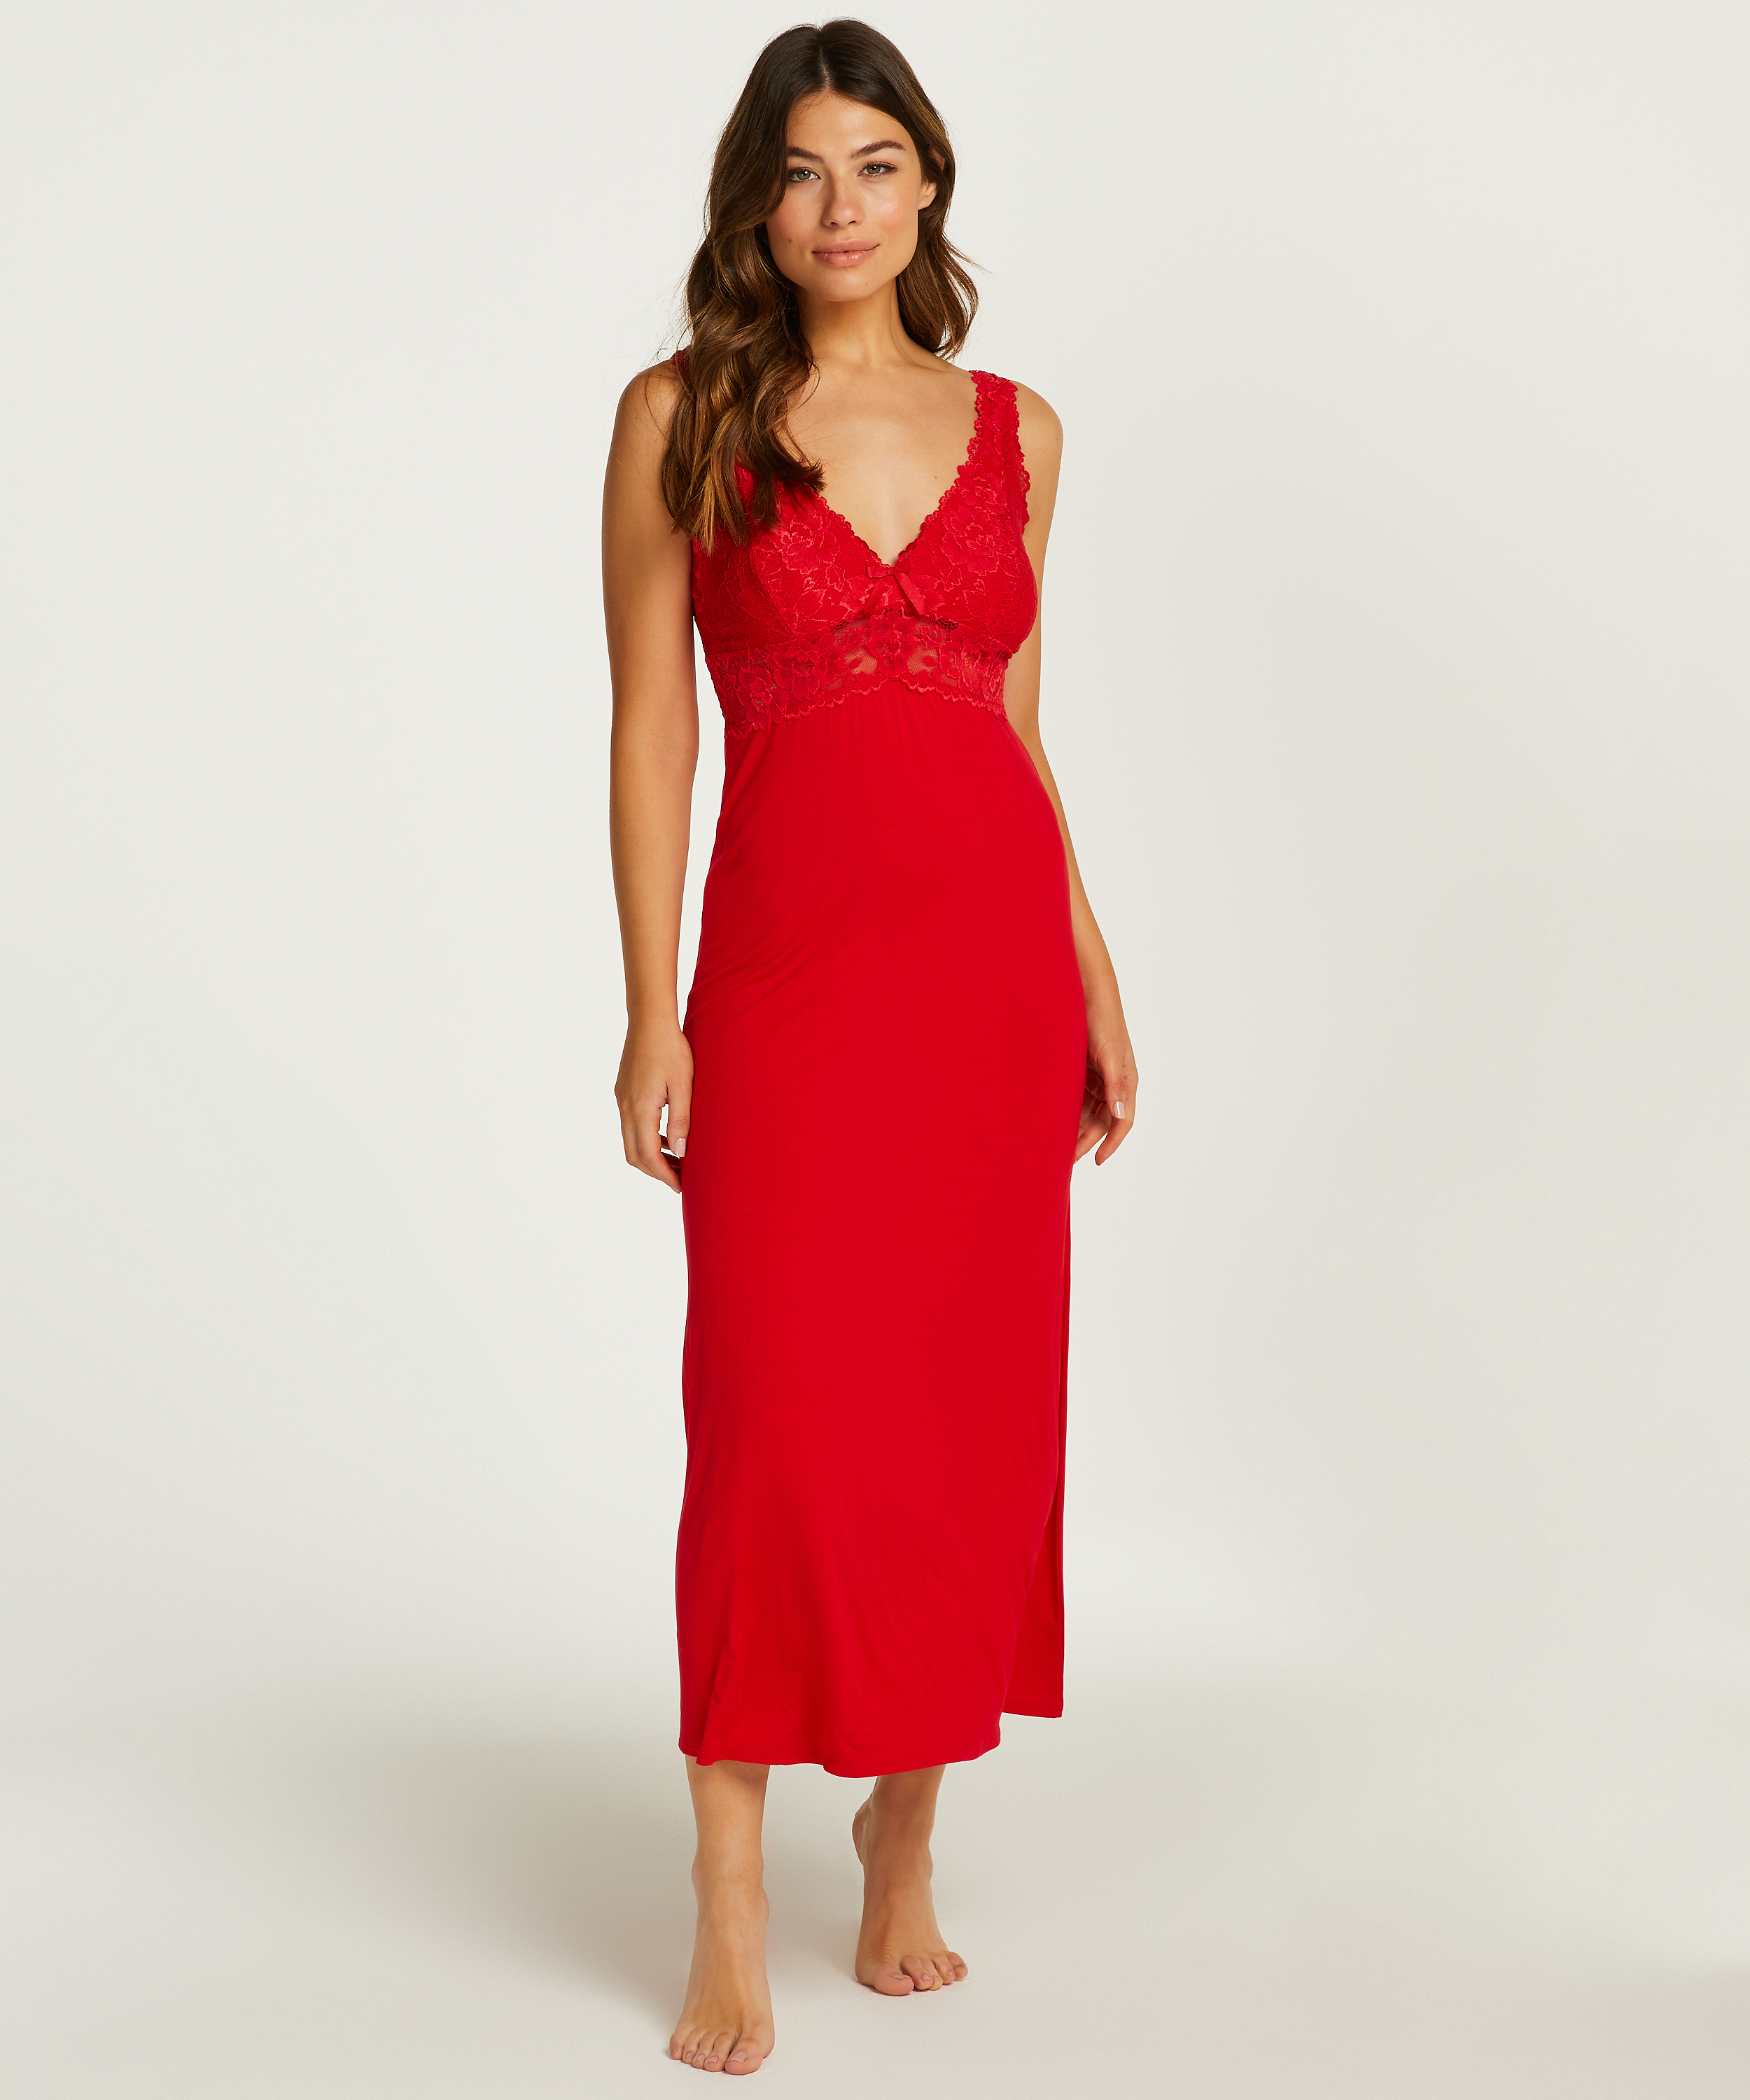 Nora Lace Long Slip Dress, Red, main